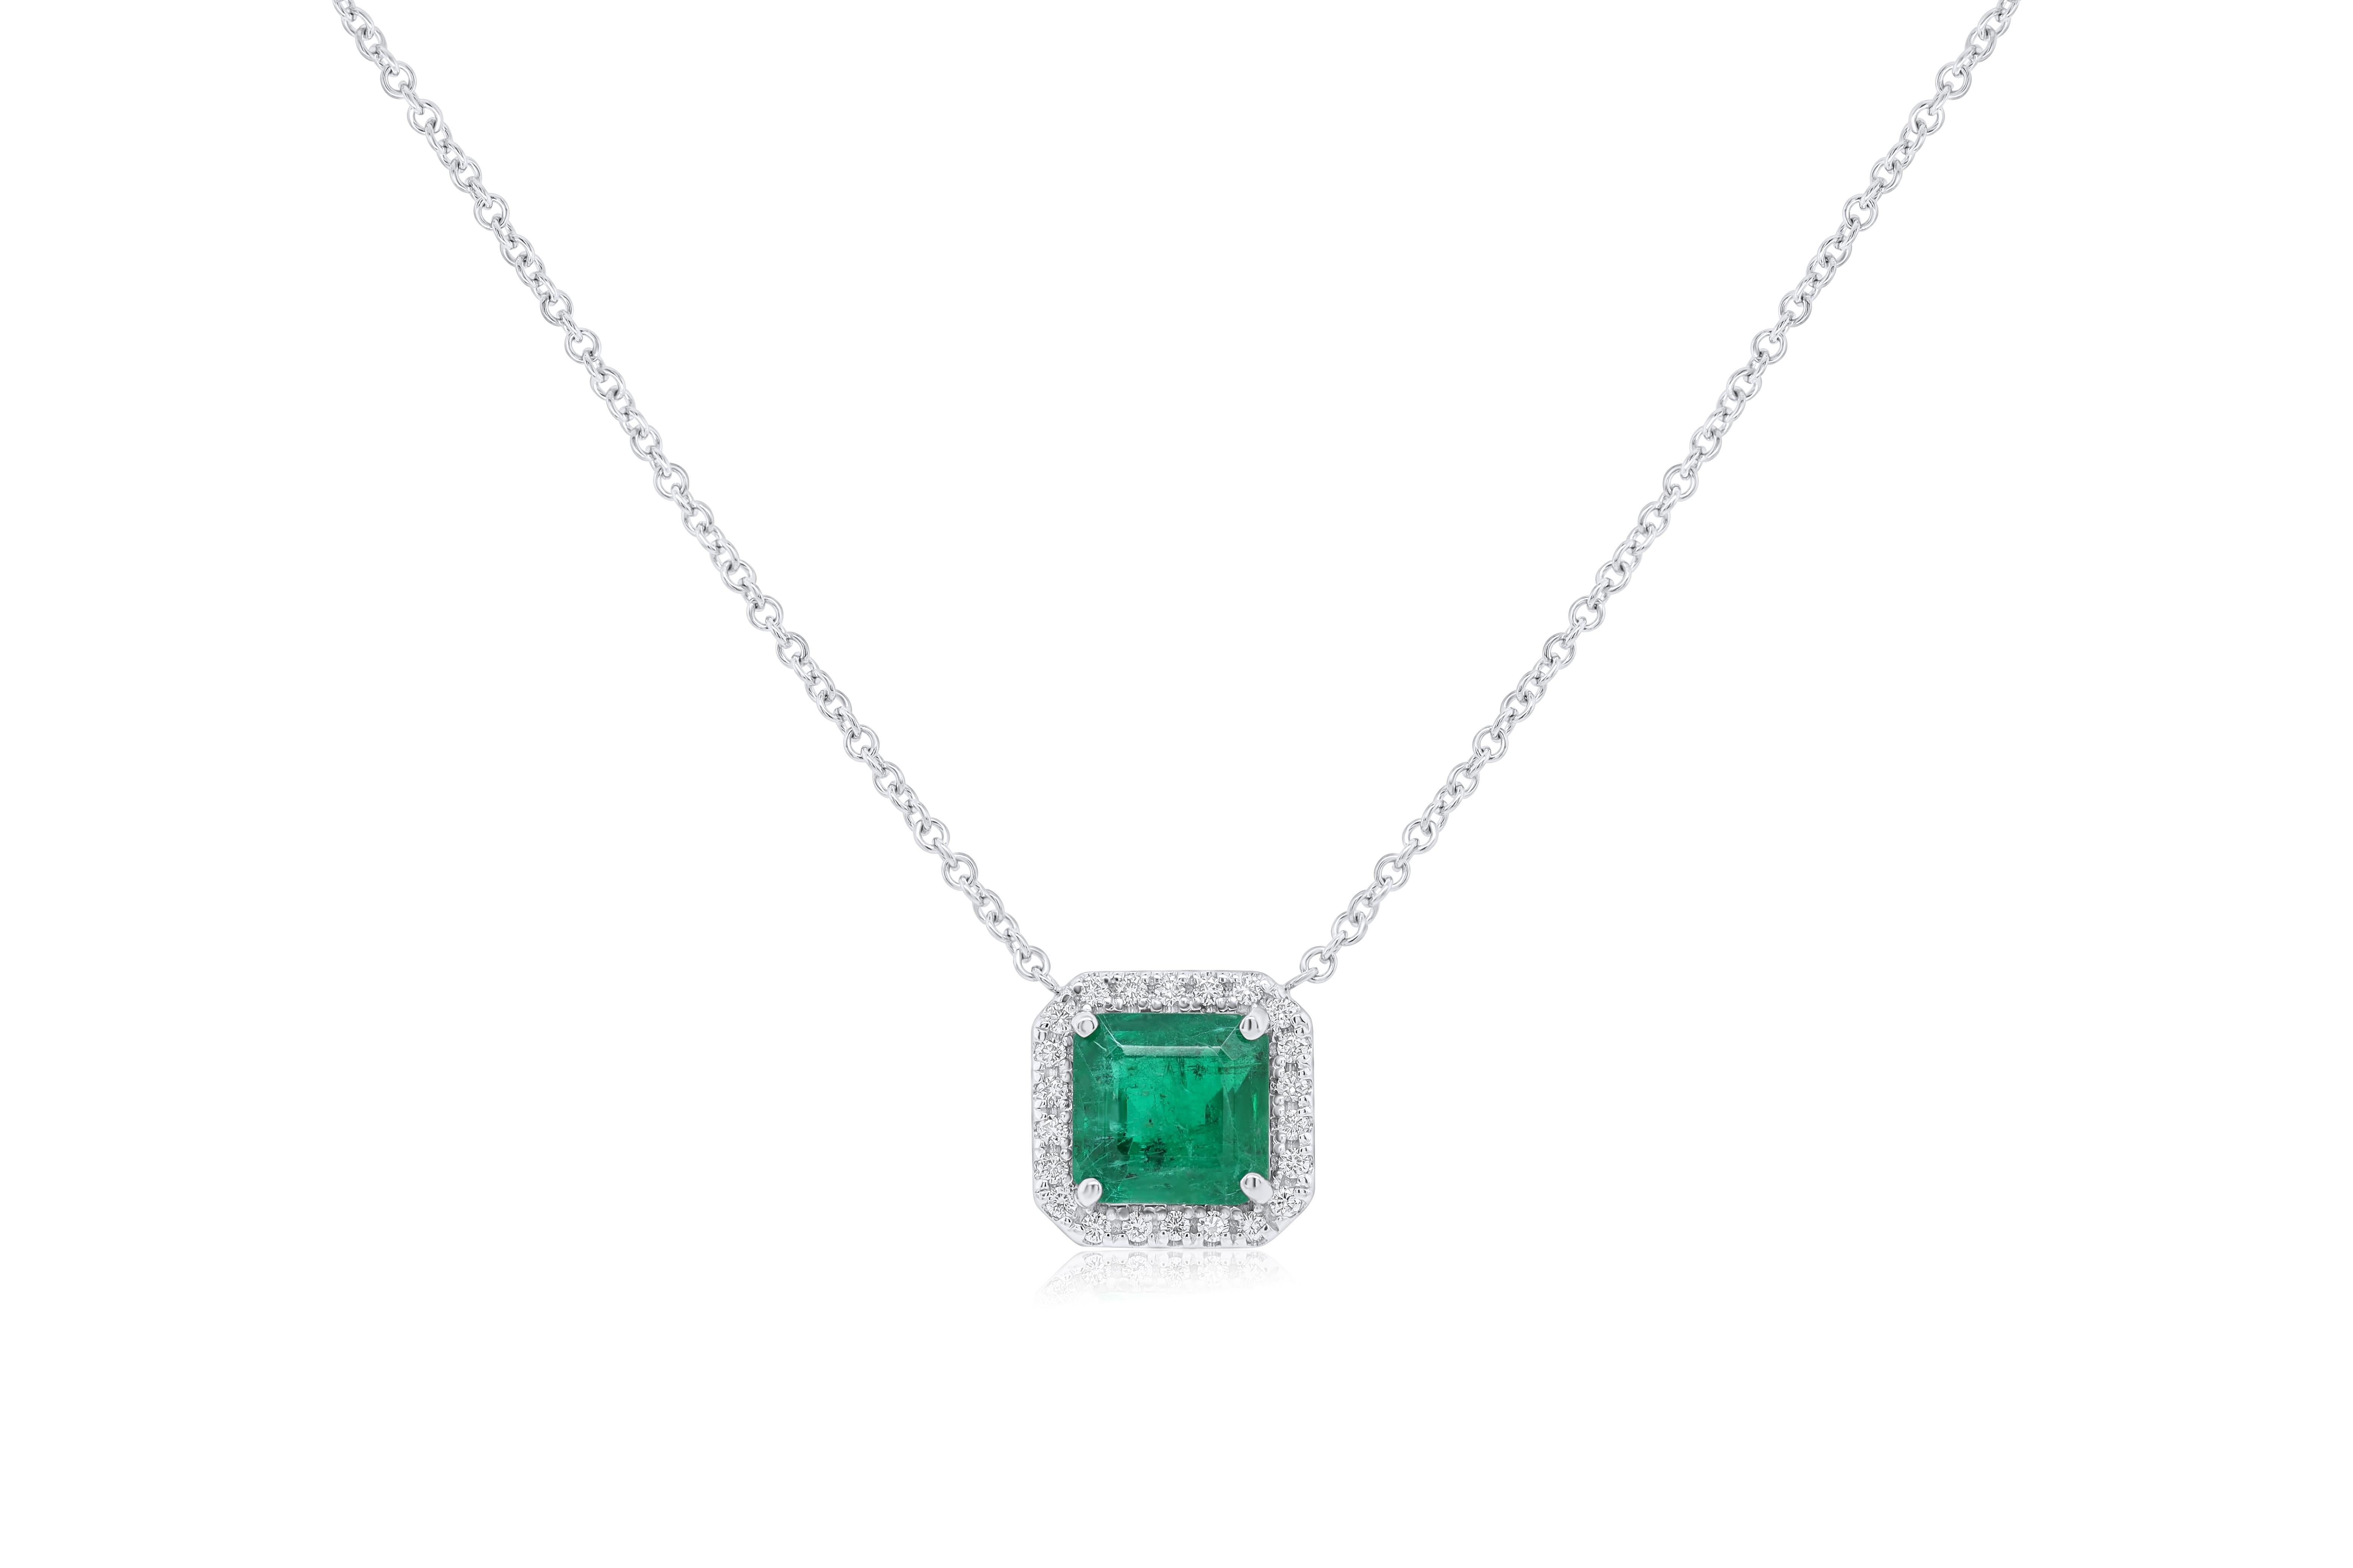 Emerald Cut Diana M. Certified 3.02 Carat Green Emerald Pendant For Sale